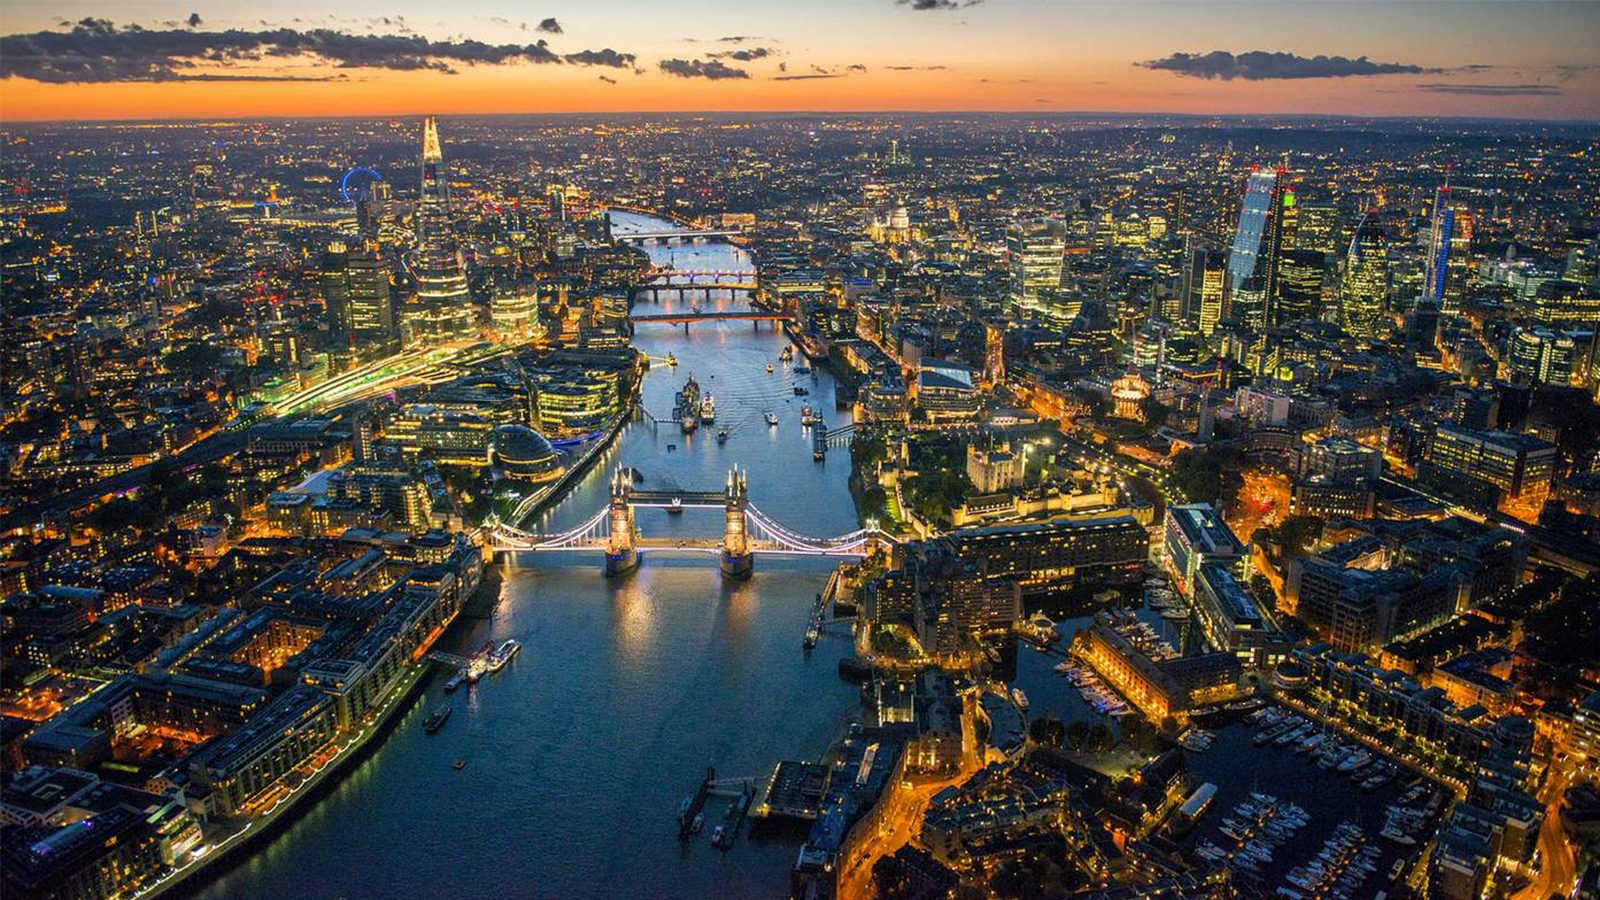 london global city case study